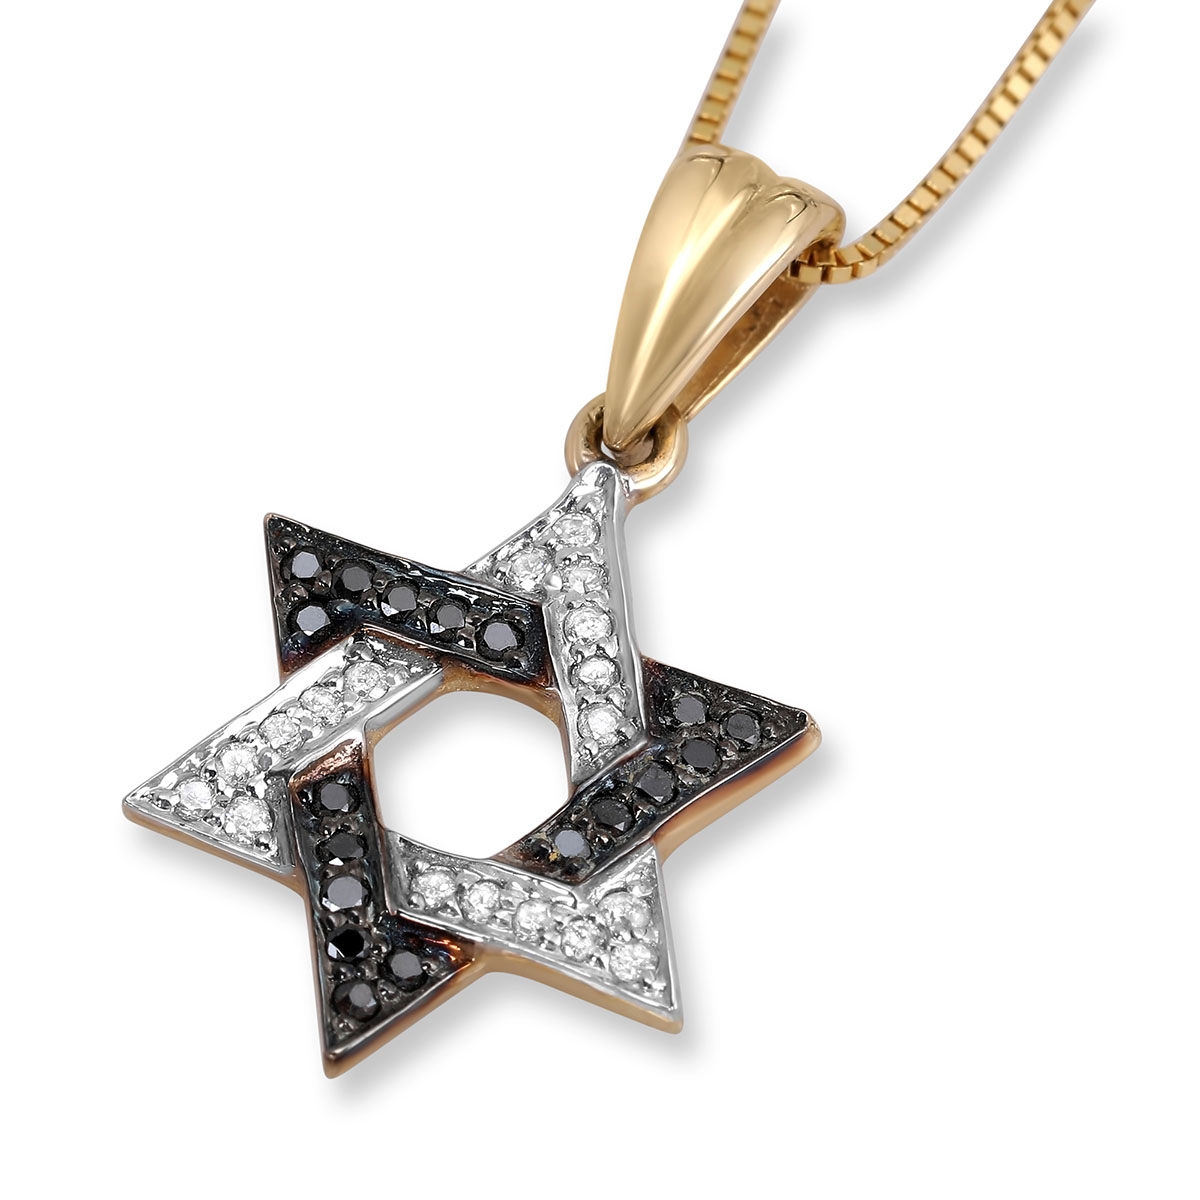 Interlocked Star of David 14K Gold and Diamonds Necklace  - 1